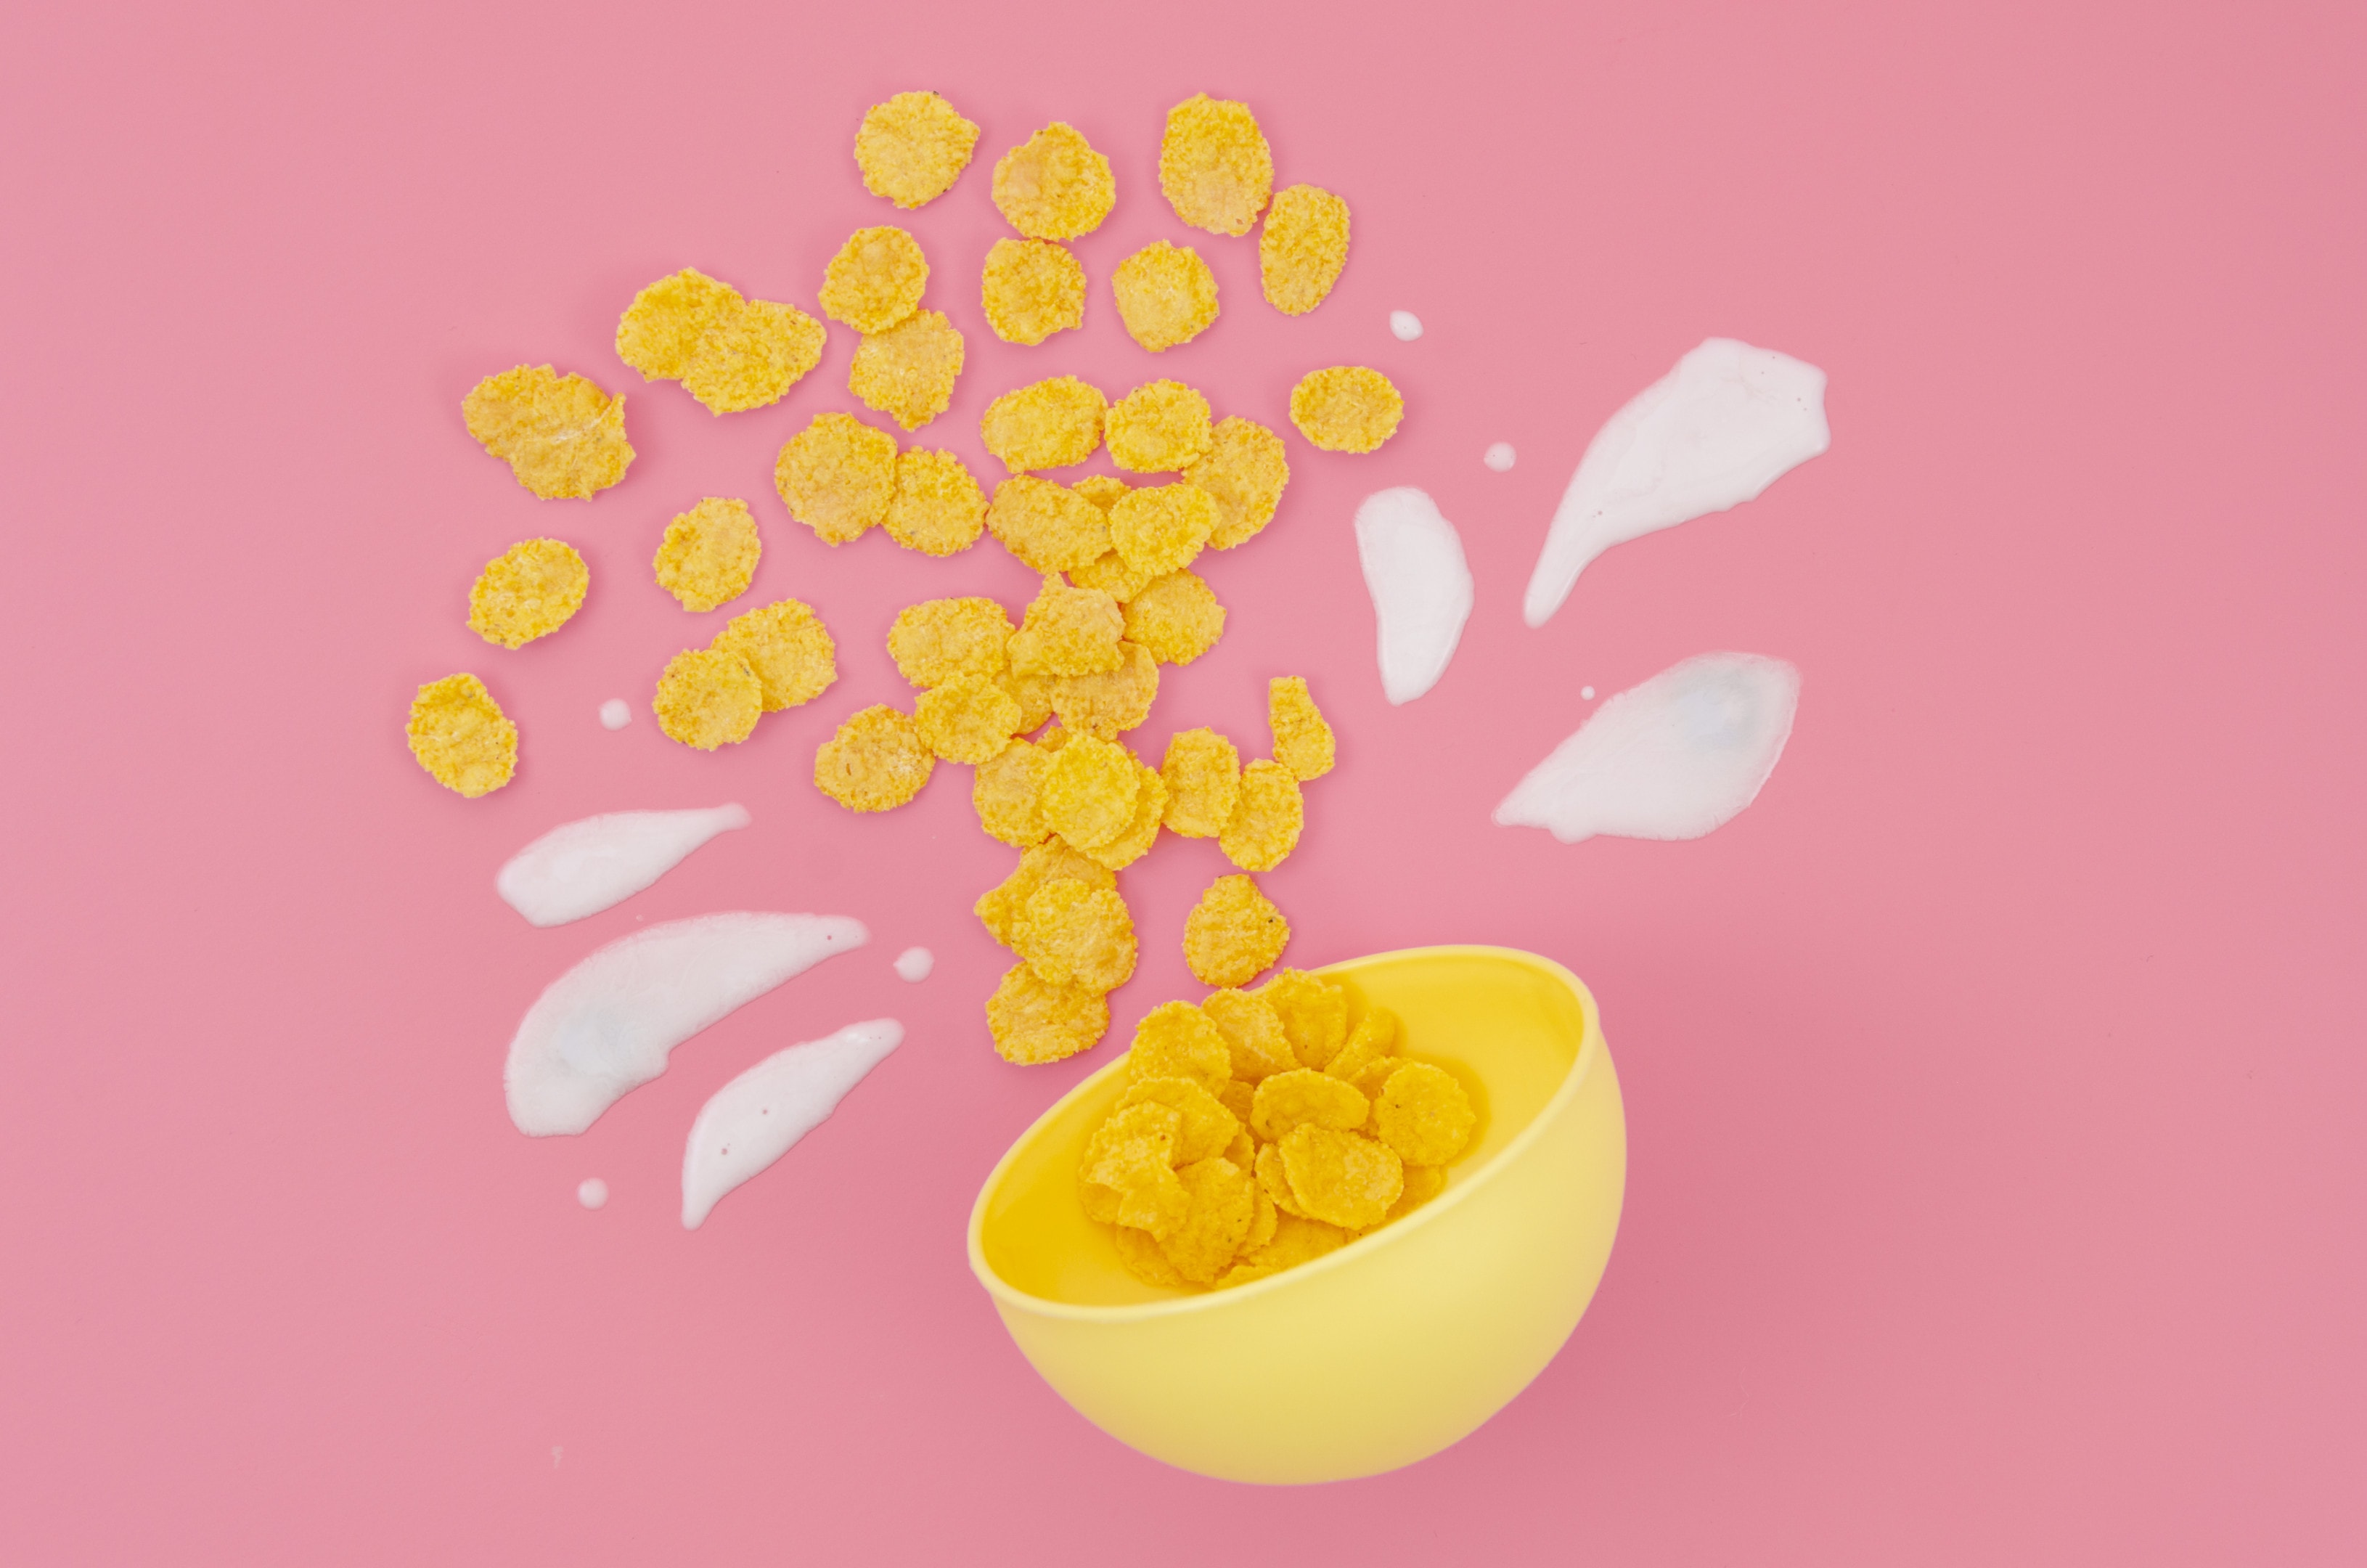 Cereal and milk arrangement on pink background